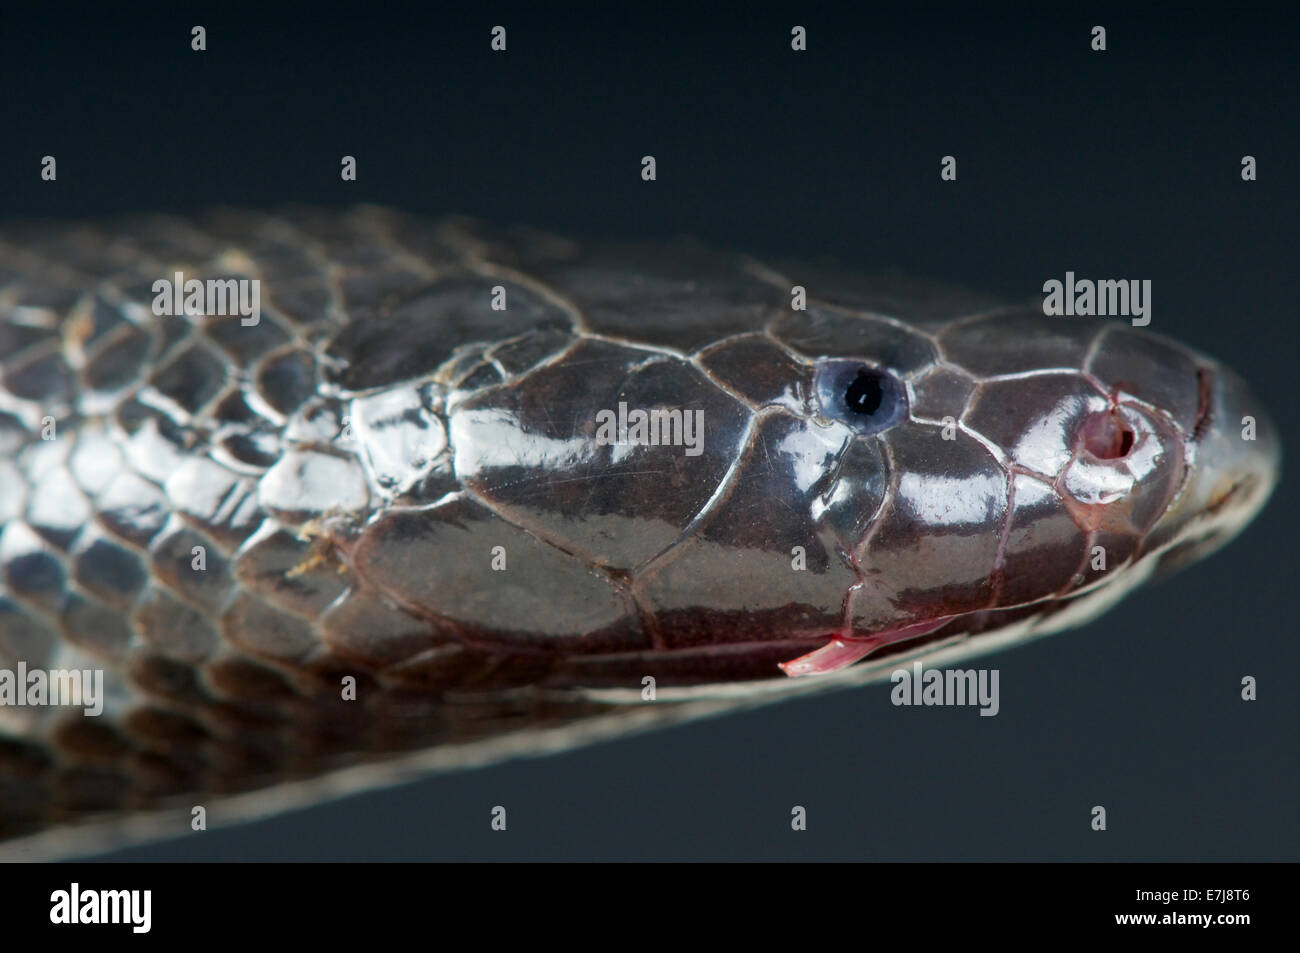 Mole snake / Atractaspis corpulenta Stock Photo